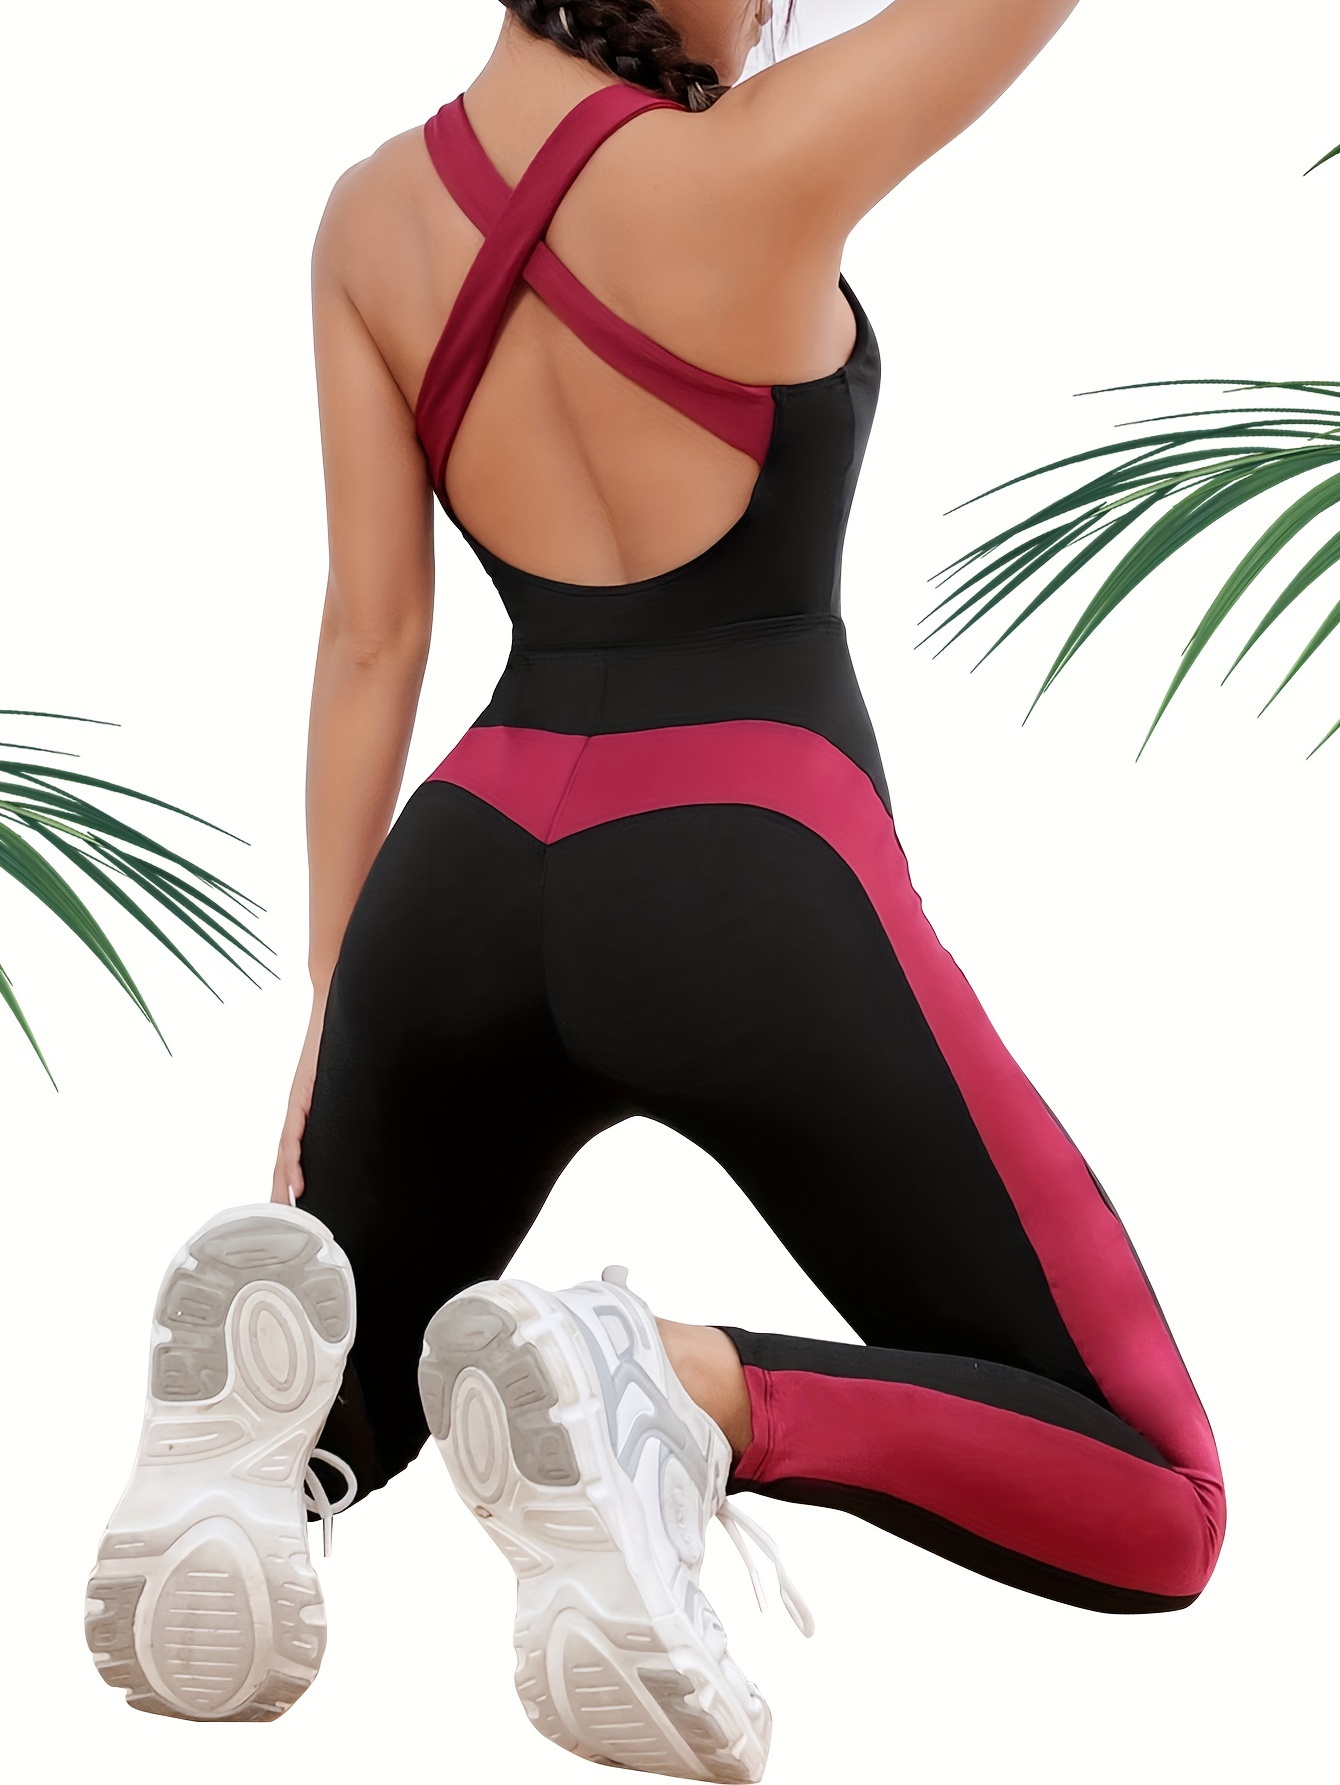 Women's Jumpsuit Onesie Workout Sets Bodysuit Yoga Fitness Gym Workout Tummy  Control Butt Lift Breathable Sport Activewear